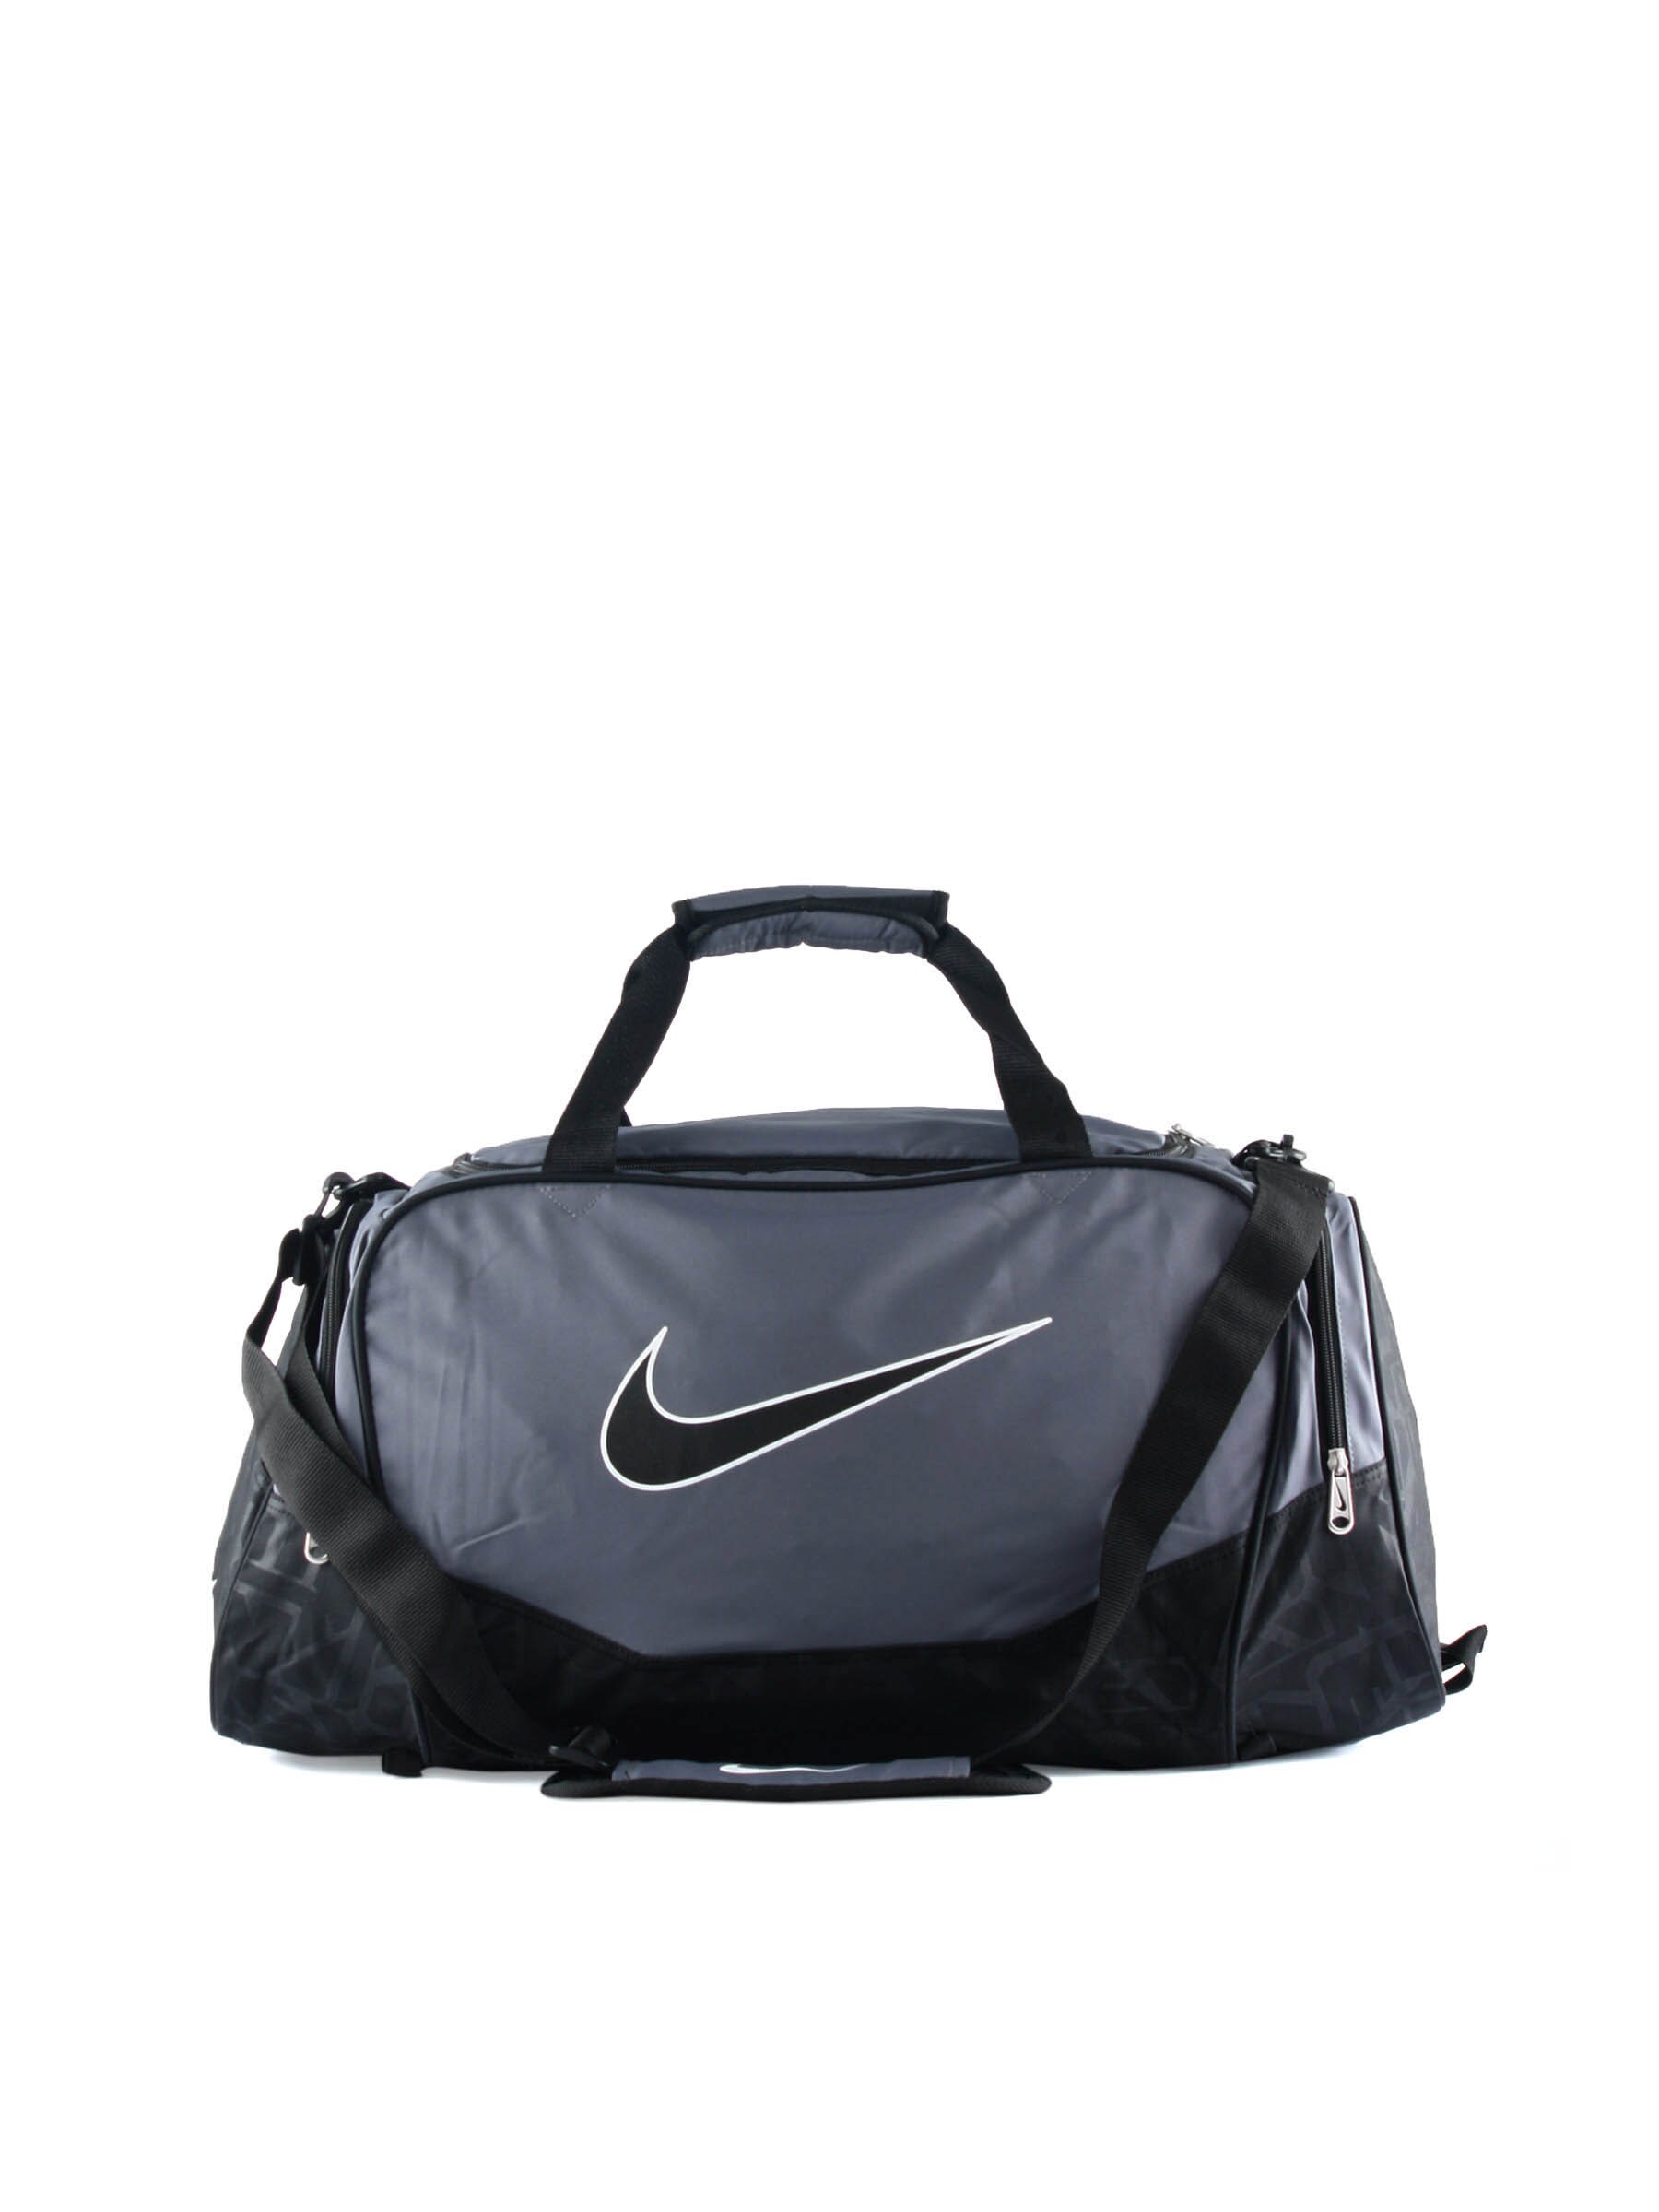 Nike Unisex Casual Black Duffle Bag